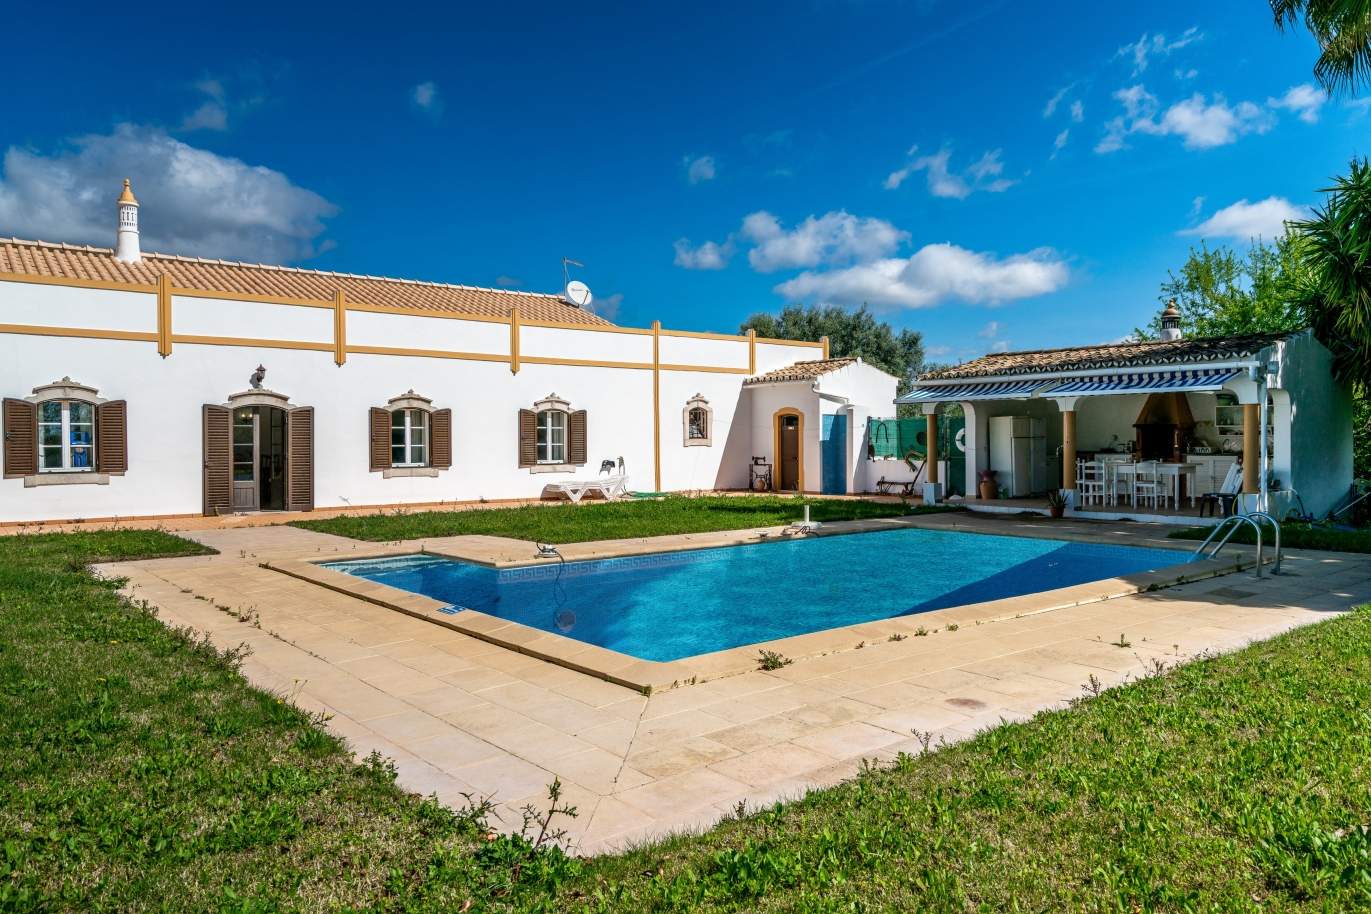 Sale of villa with pool in Boliqueime, Loulé, Algarve, Portugal_98524